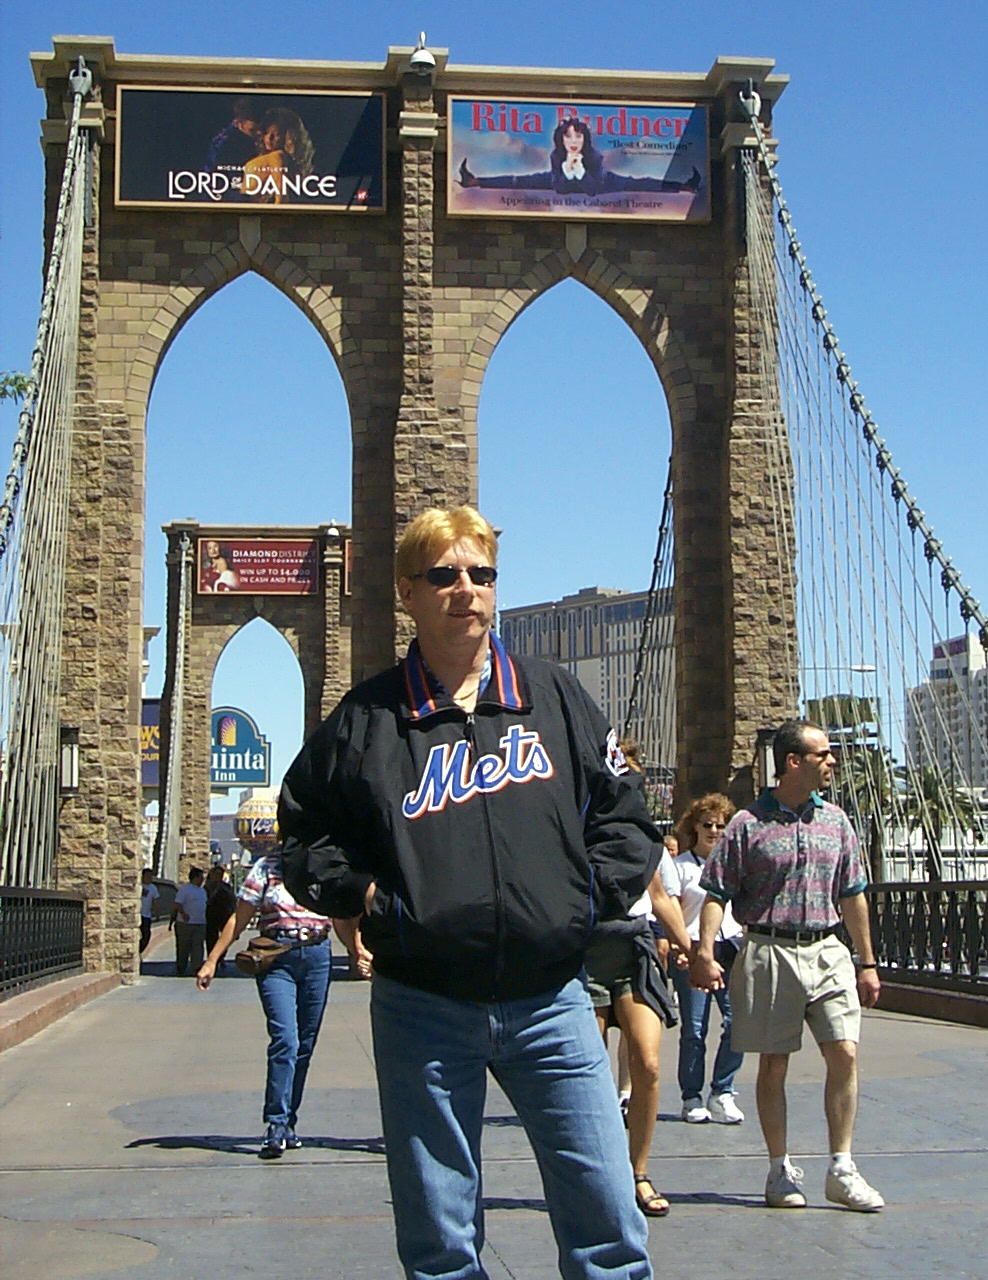 Our Brooklyn boy in his Met's baseball jacket - go figure